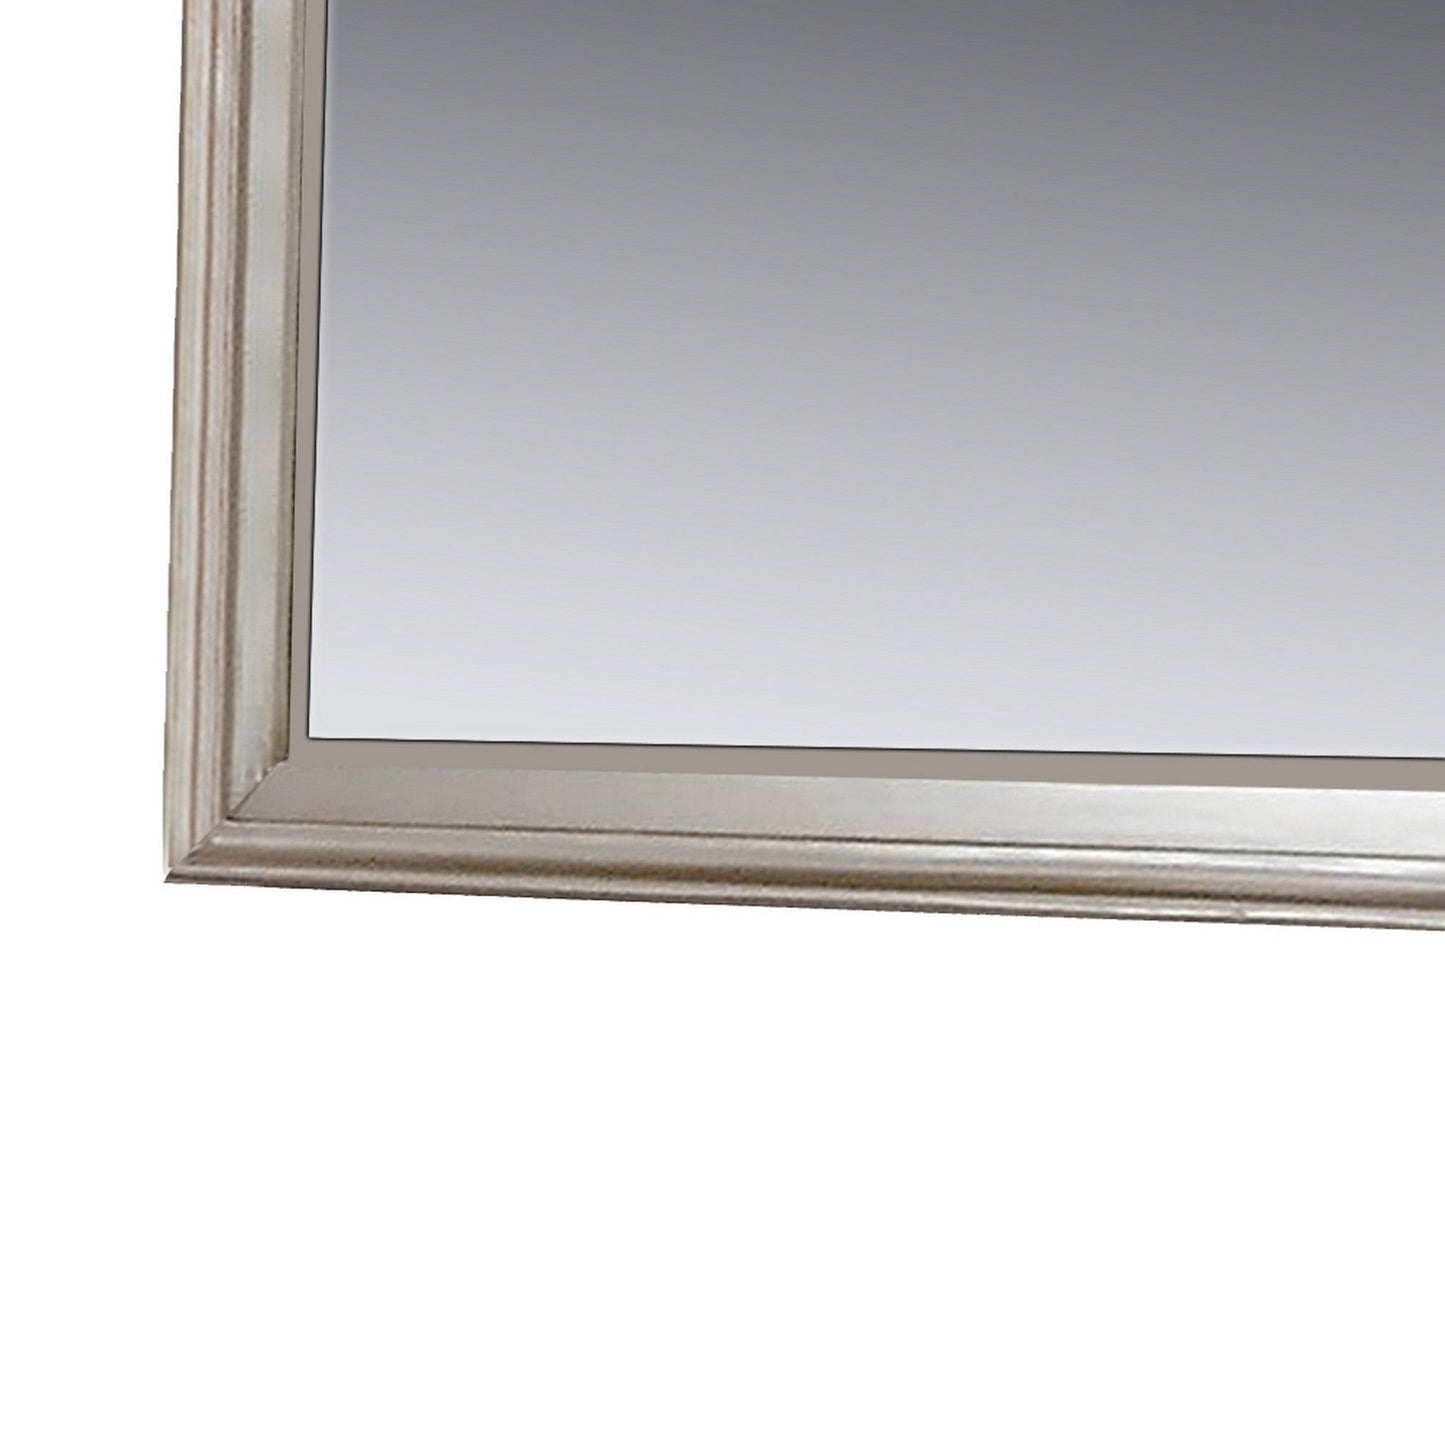 Benzara 36" Rectangular Silver Molded Wood Encased Mirror